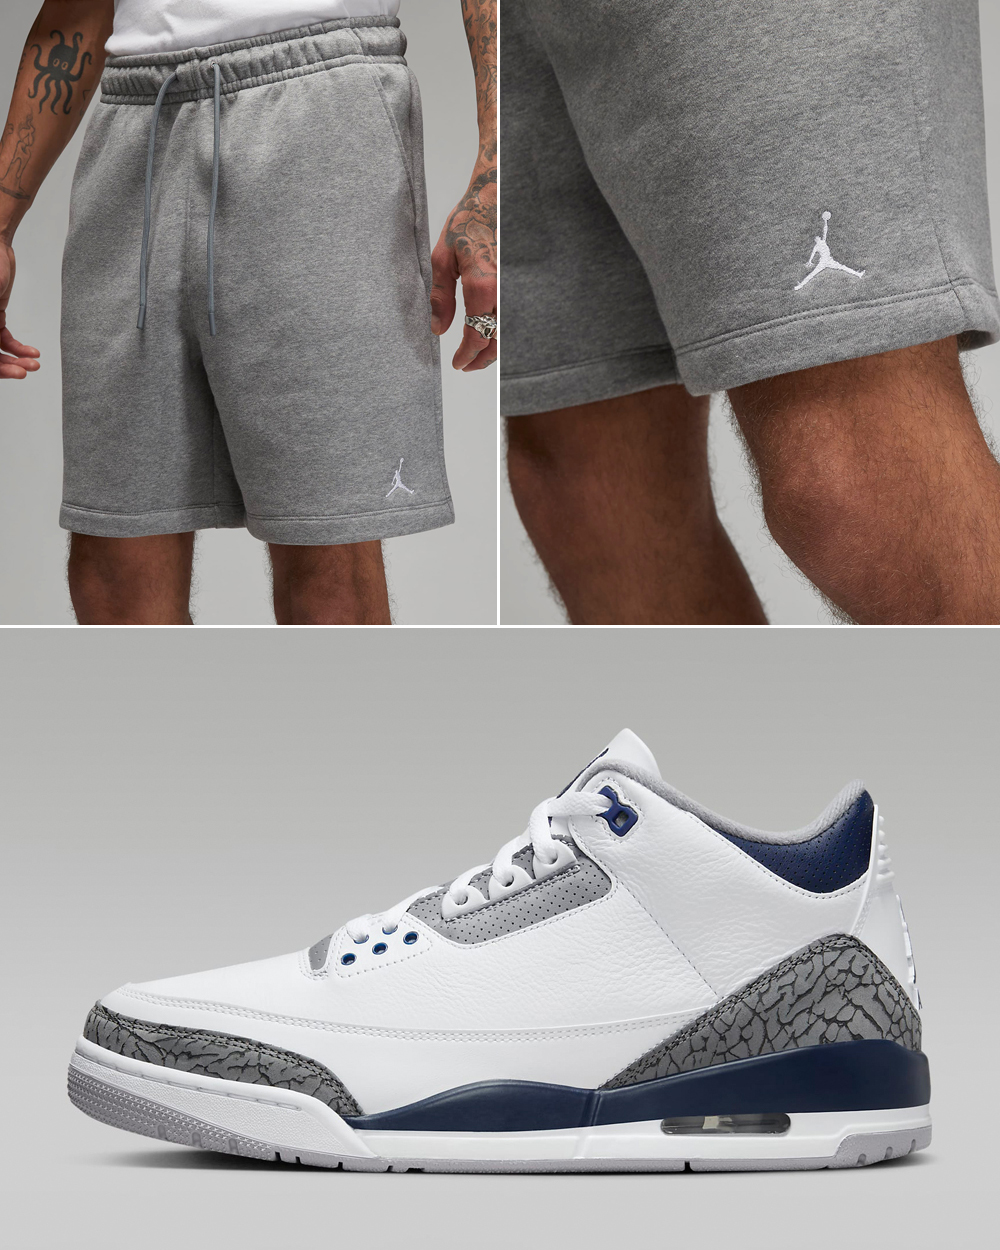 Air-Jordan-3-Midnight-Navy-Cement-Grey-Fleece-Shorts